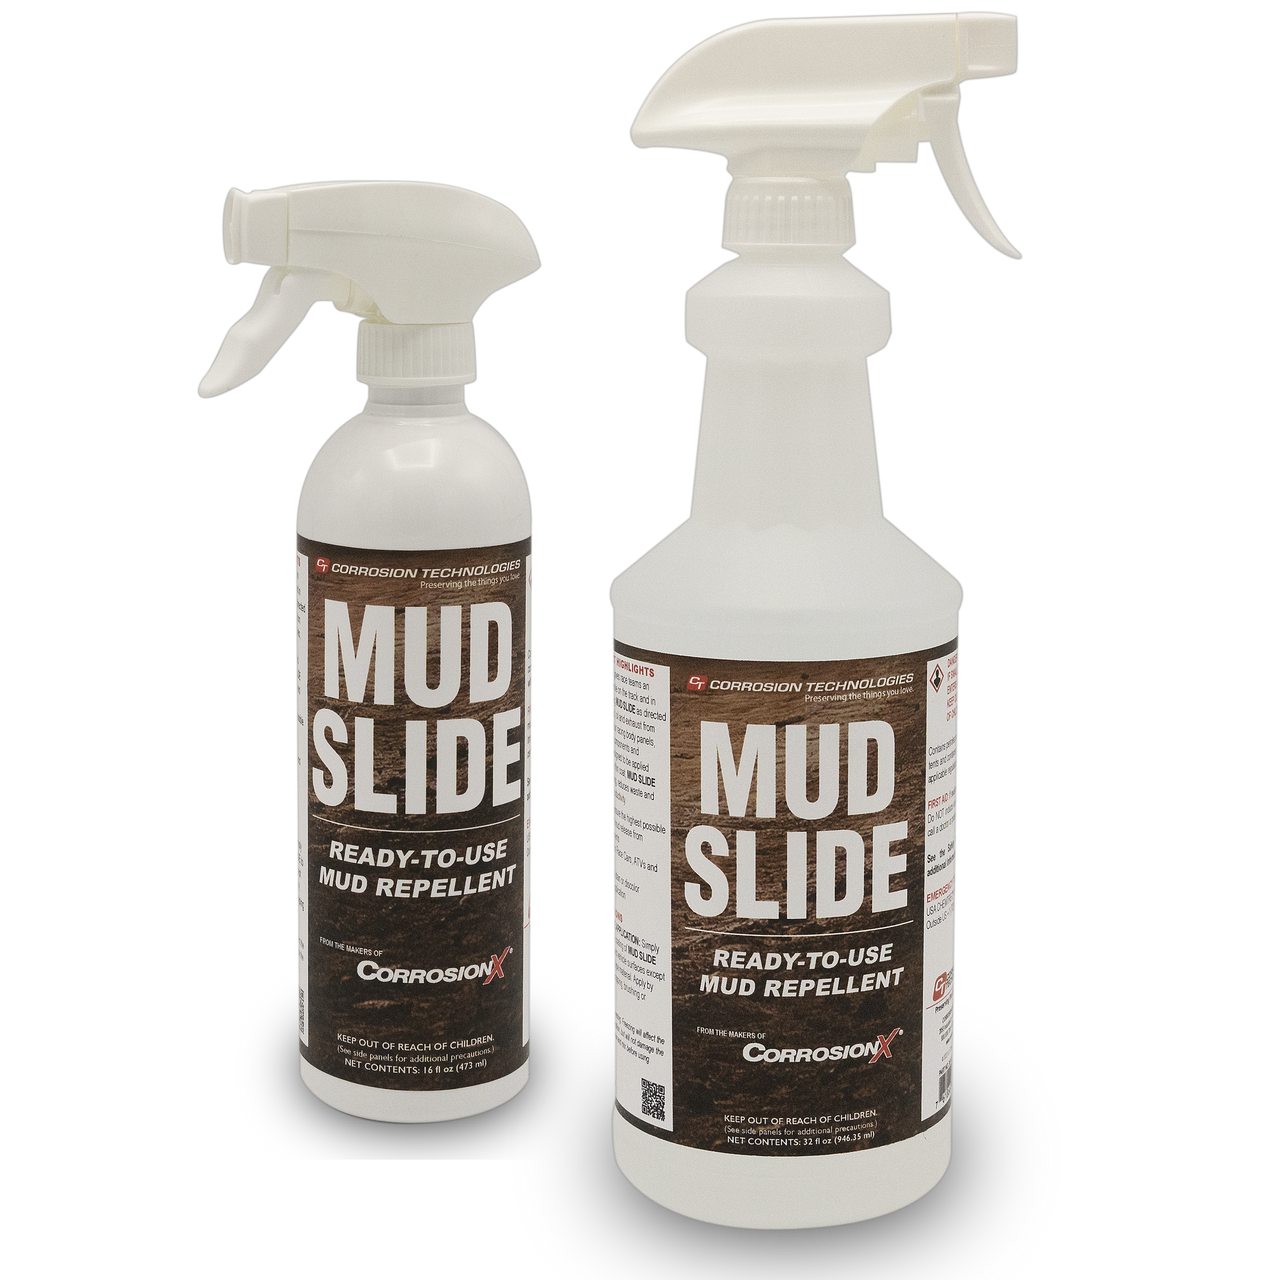 Mud Slide ready-to-use mud repellent